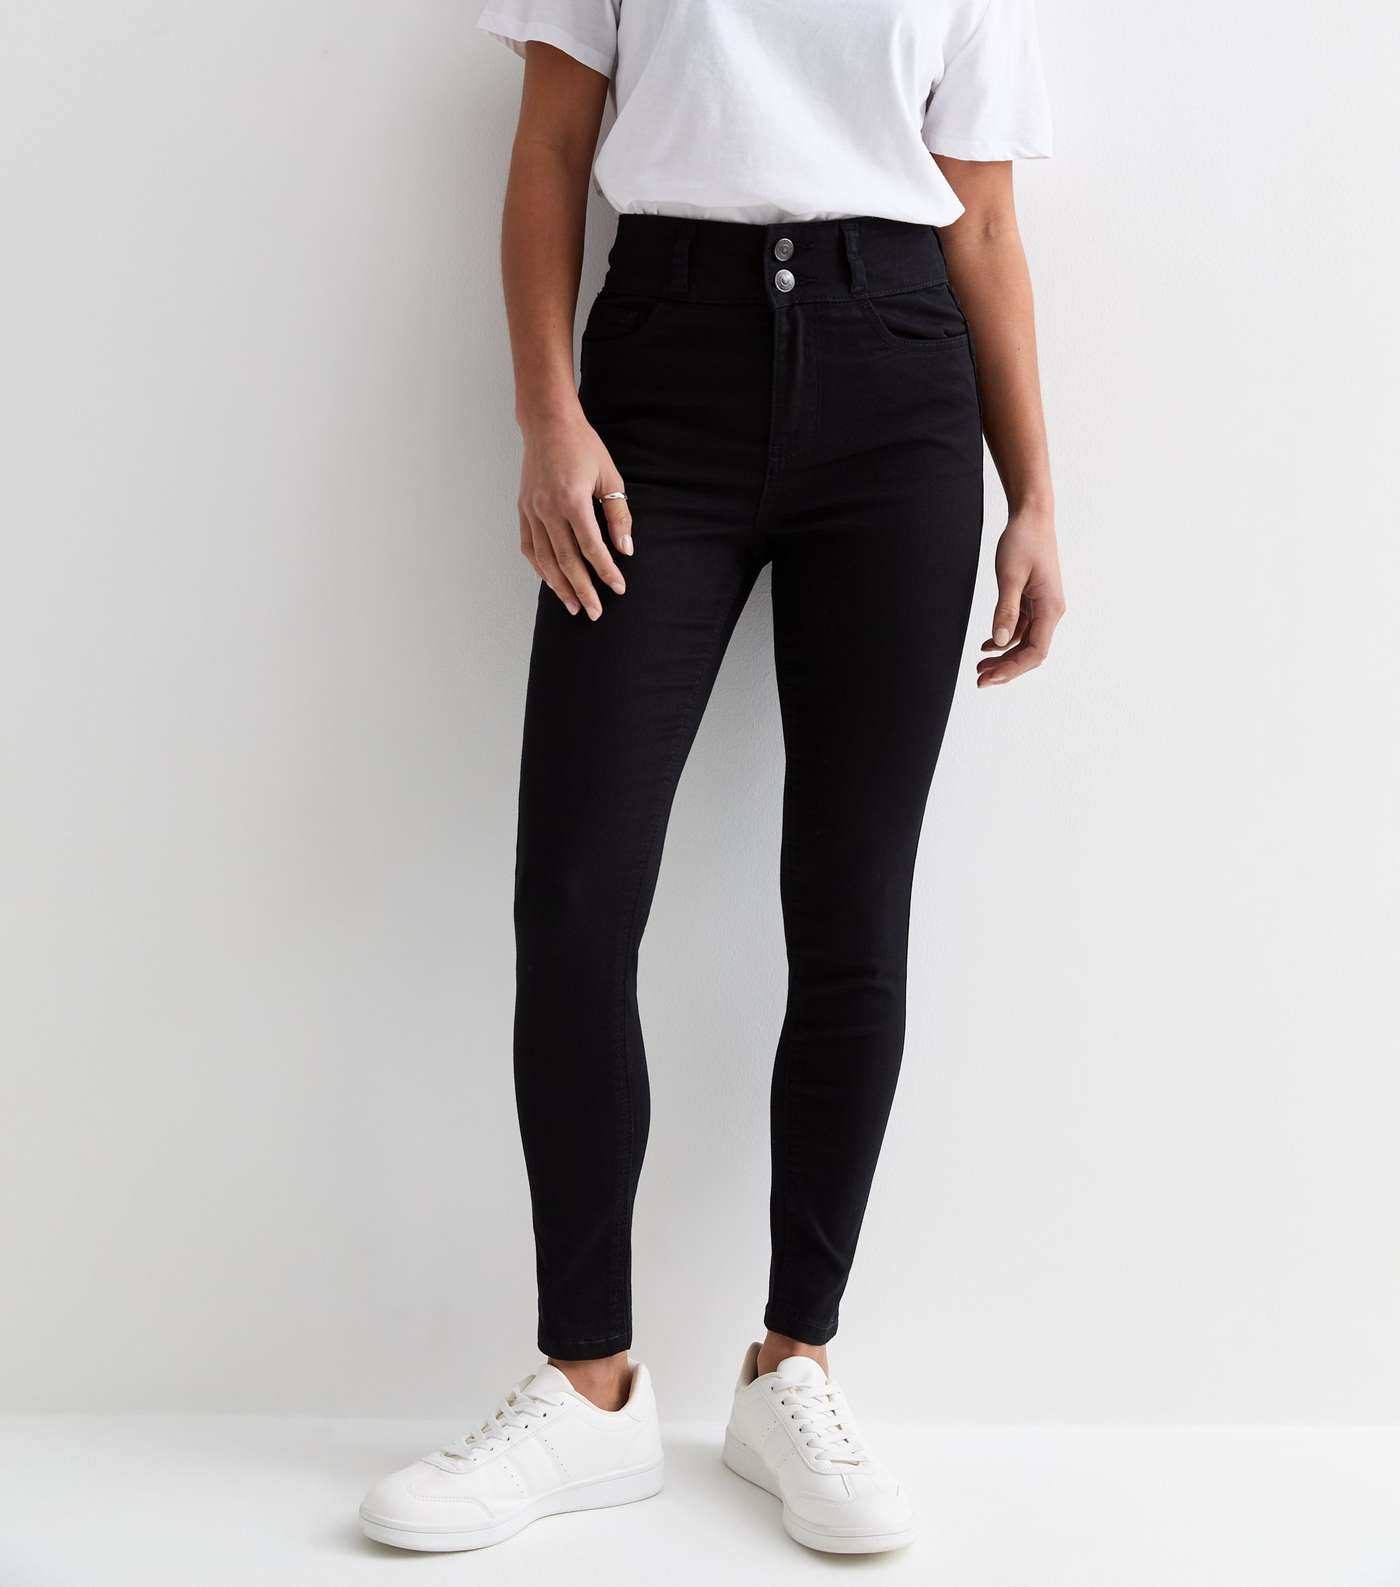 Petite Black Lift & Shape High Waist Yazmin Skinny Jeans Image 2